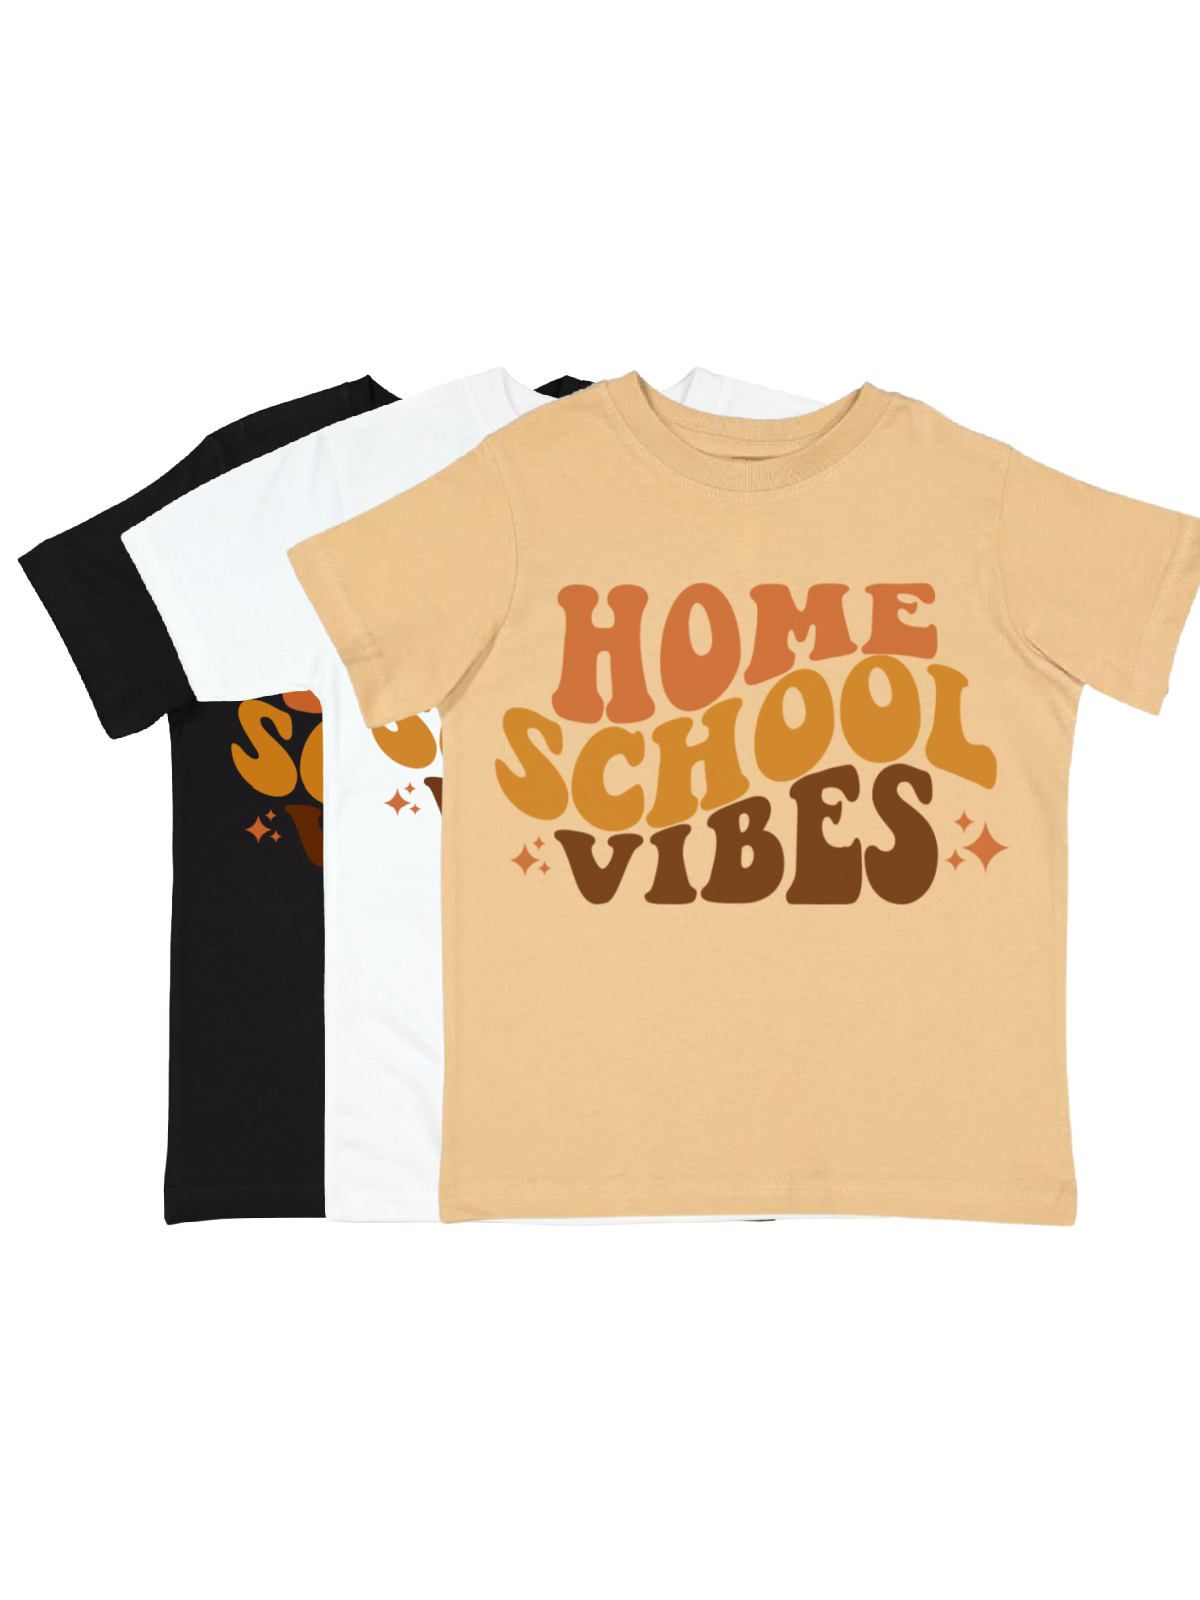 Homeschool Vibes Kids Shirt in White